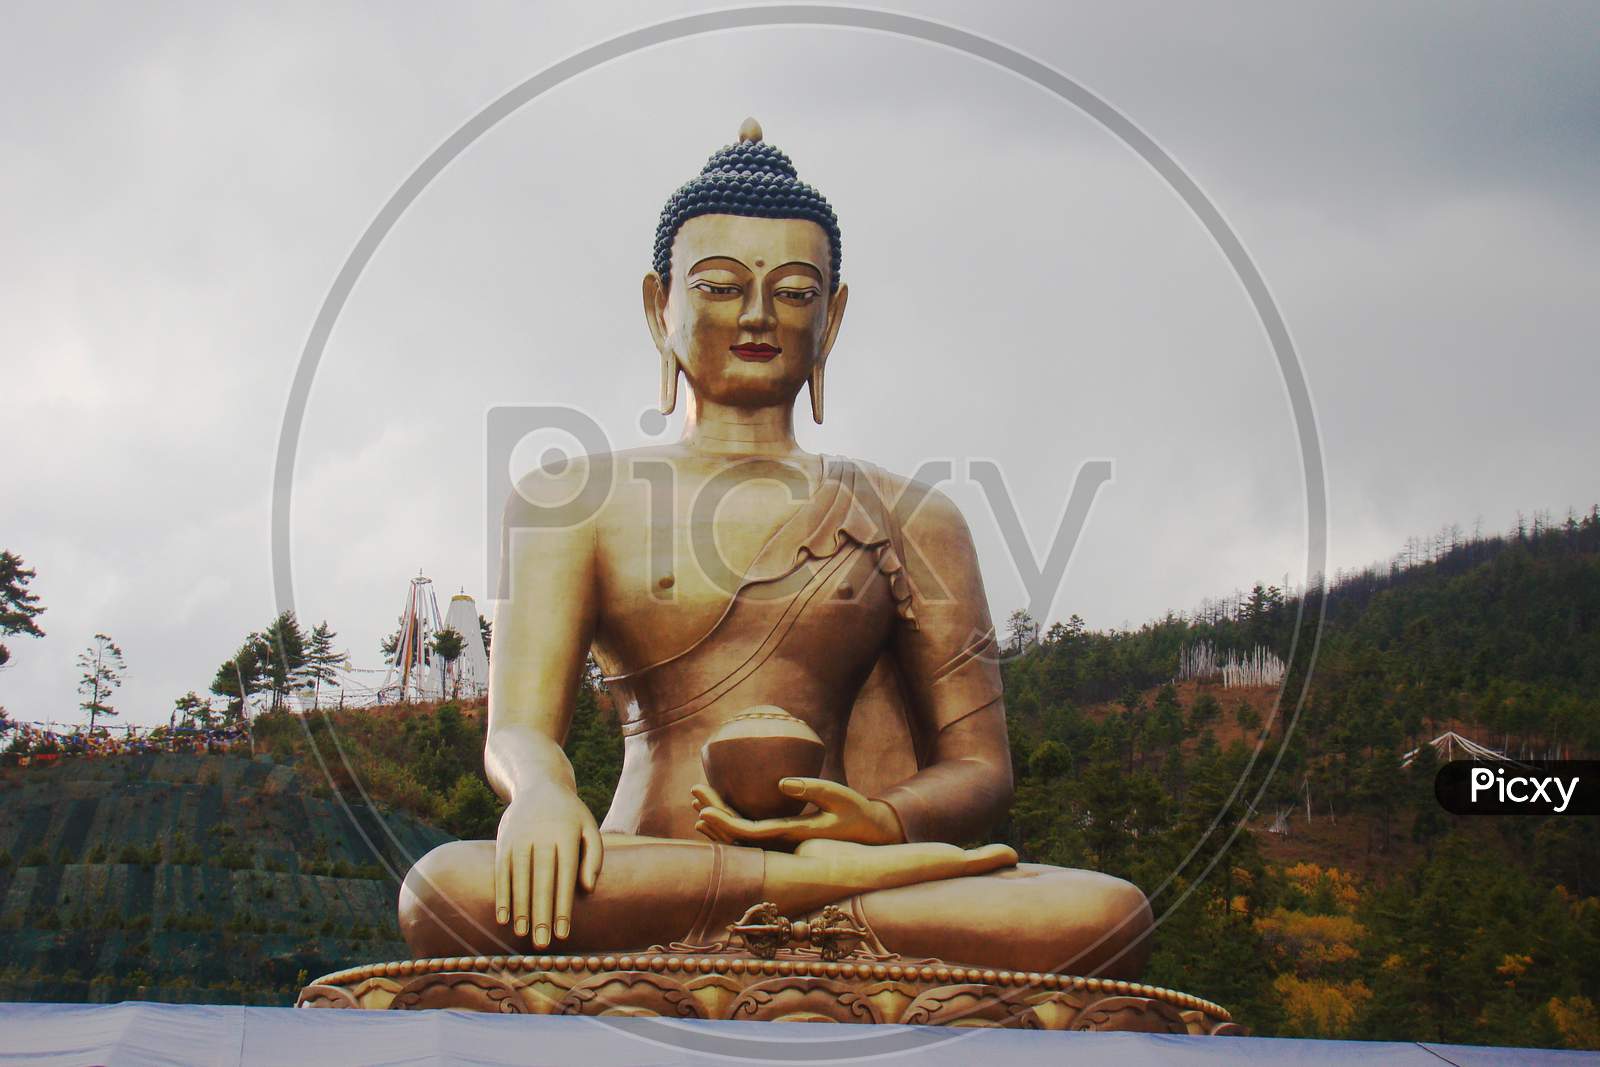 Giant Buddha statue in Thimpu, a capital city of Bhutan.